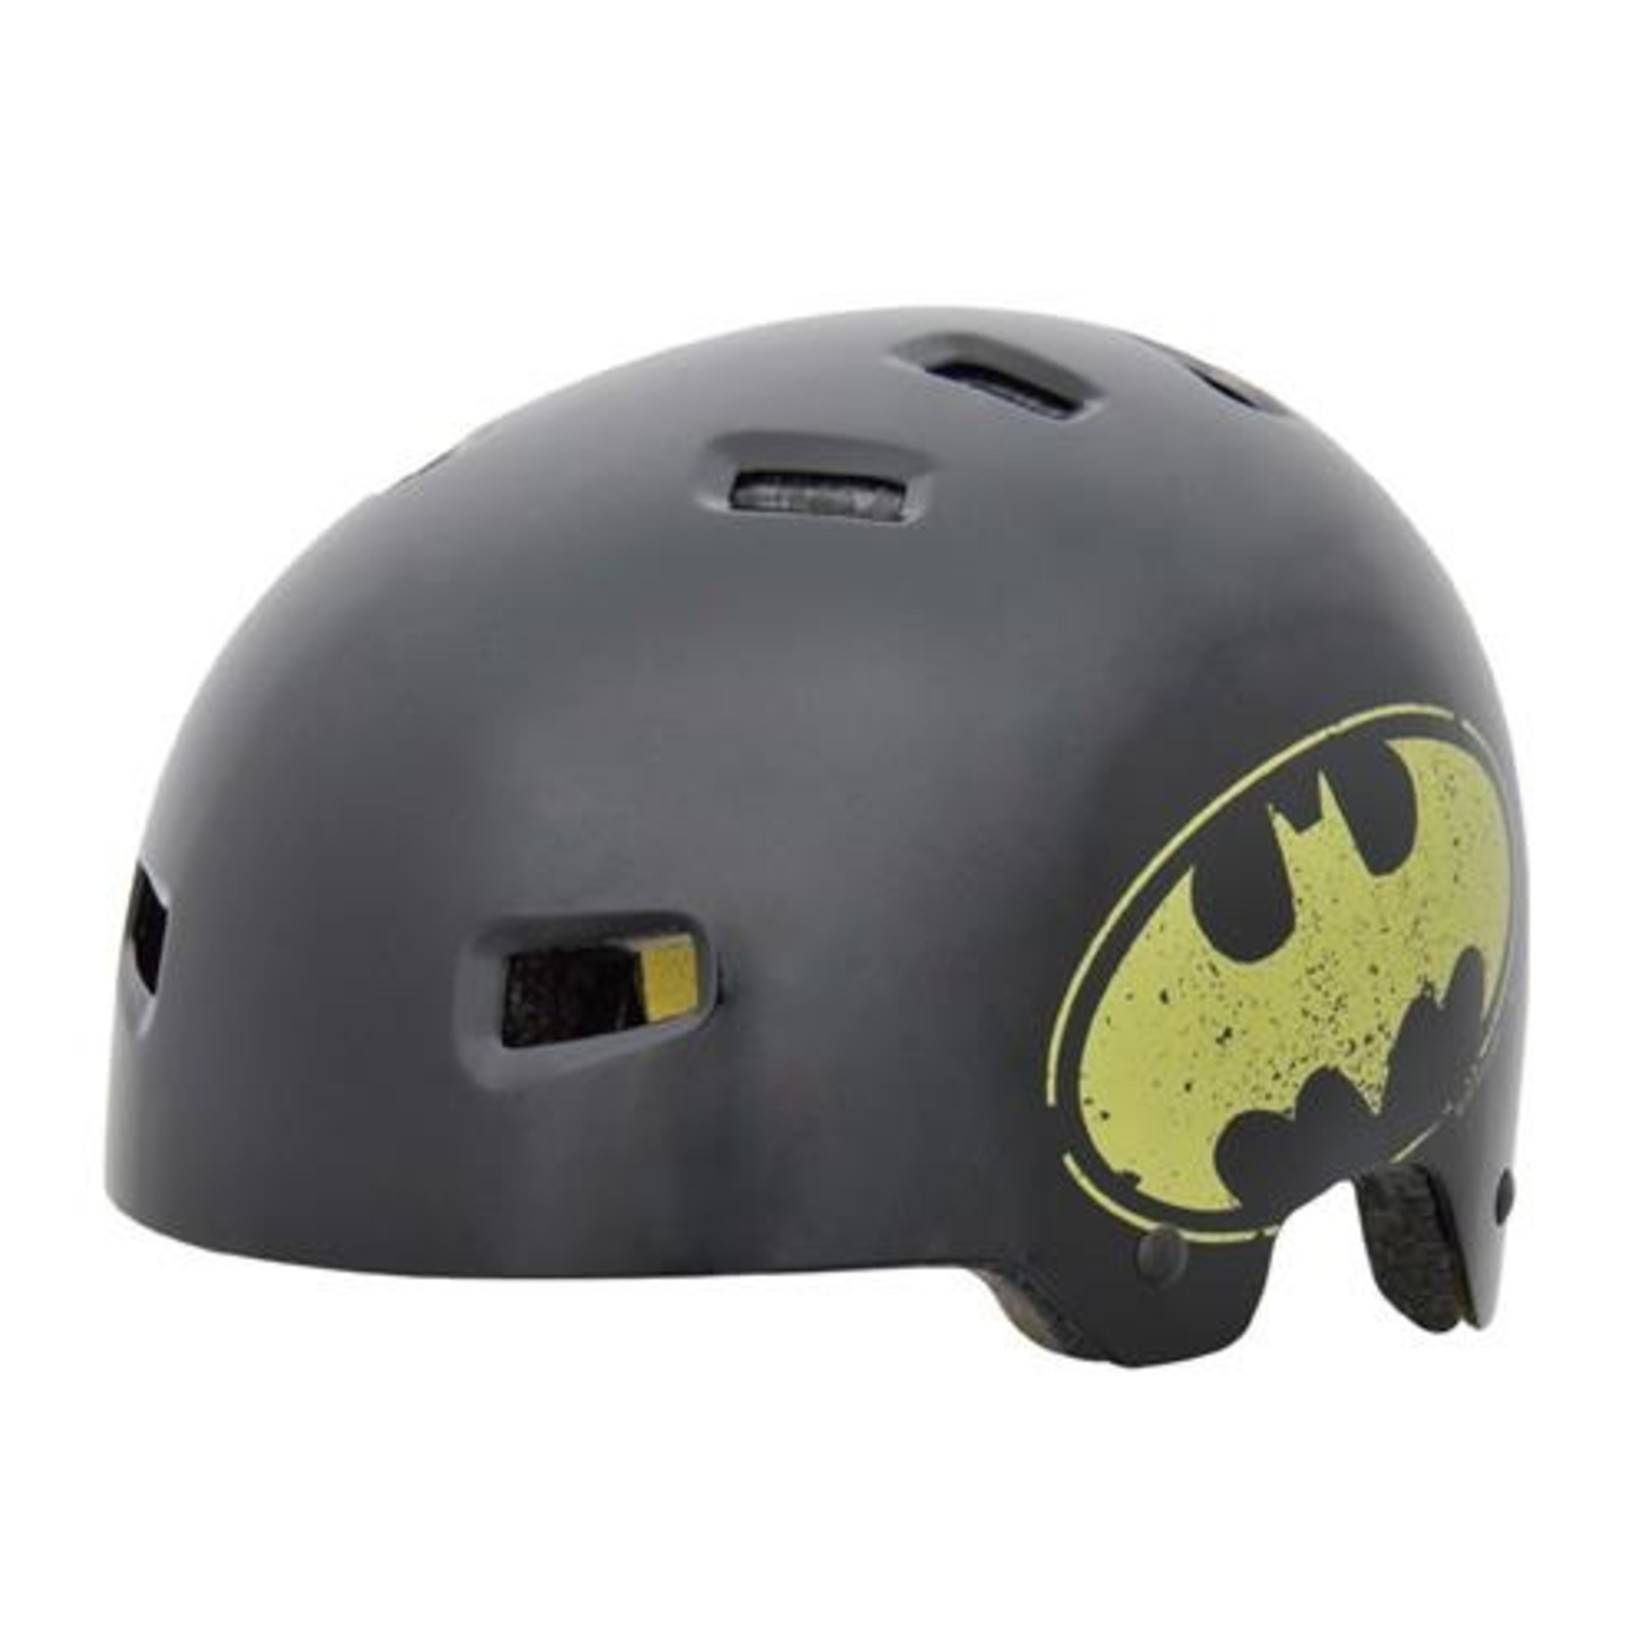 Licensed Batman Kid's Bike Helmet - Size 50-54cm - Licensed Black Dial Fit System